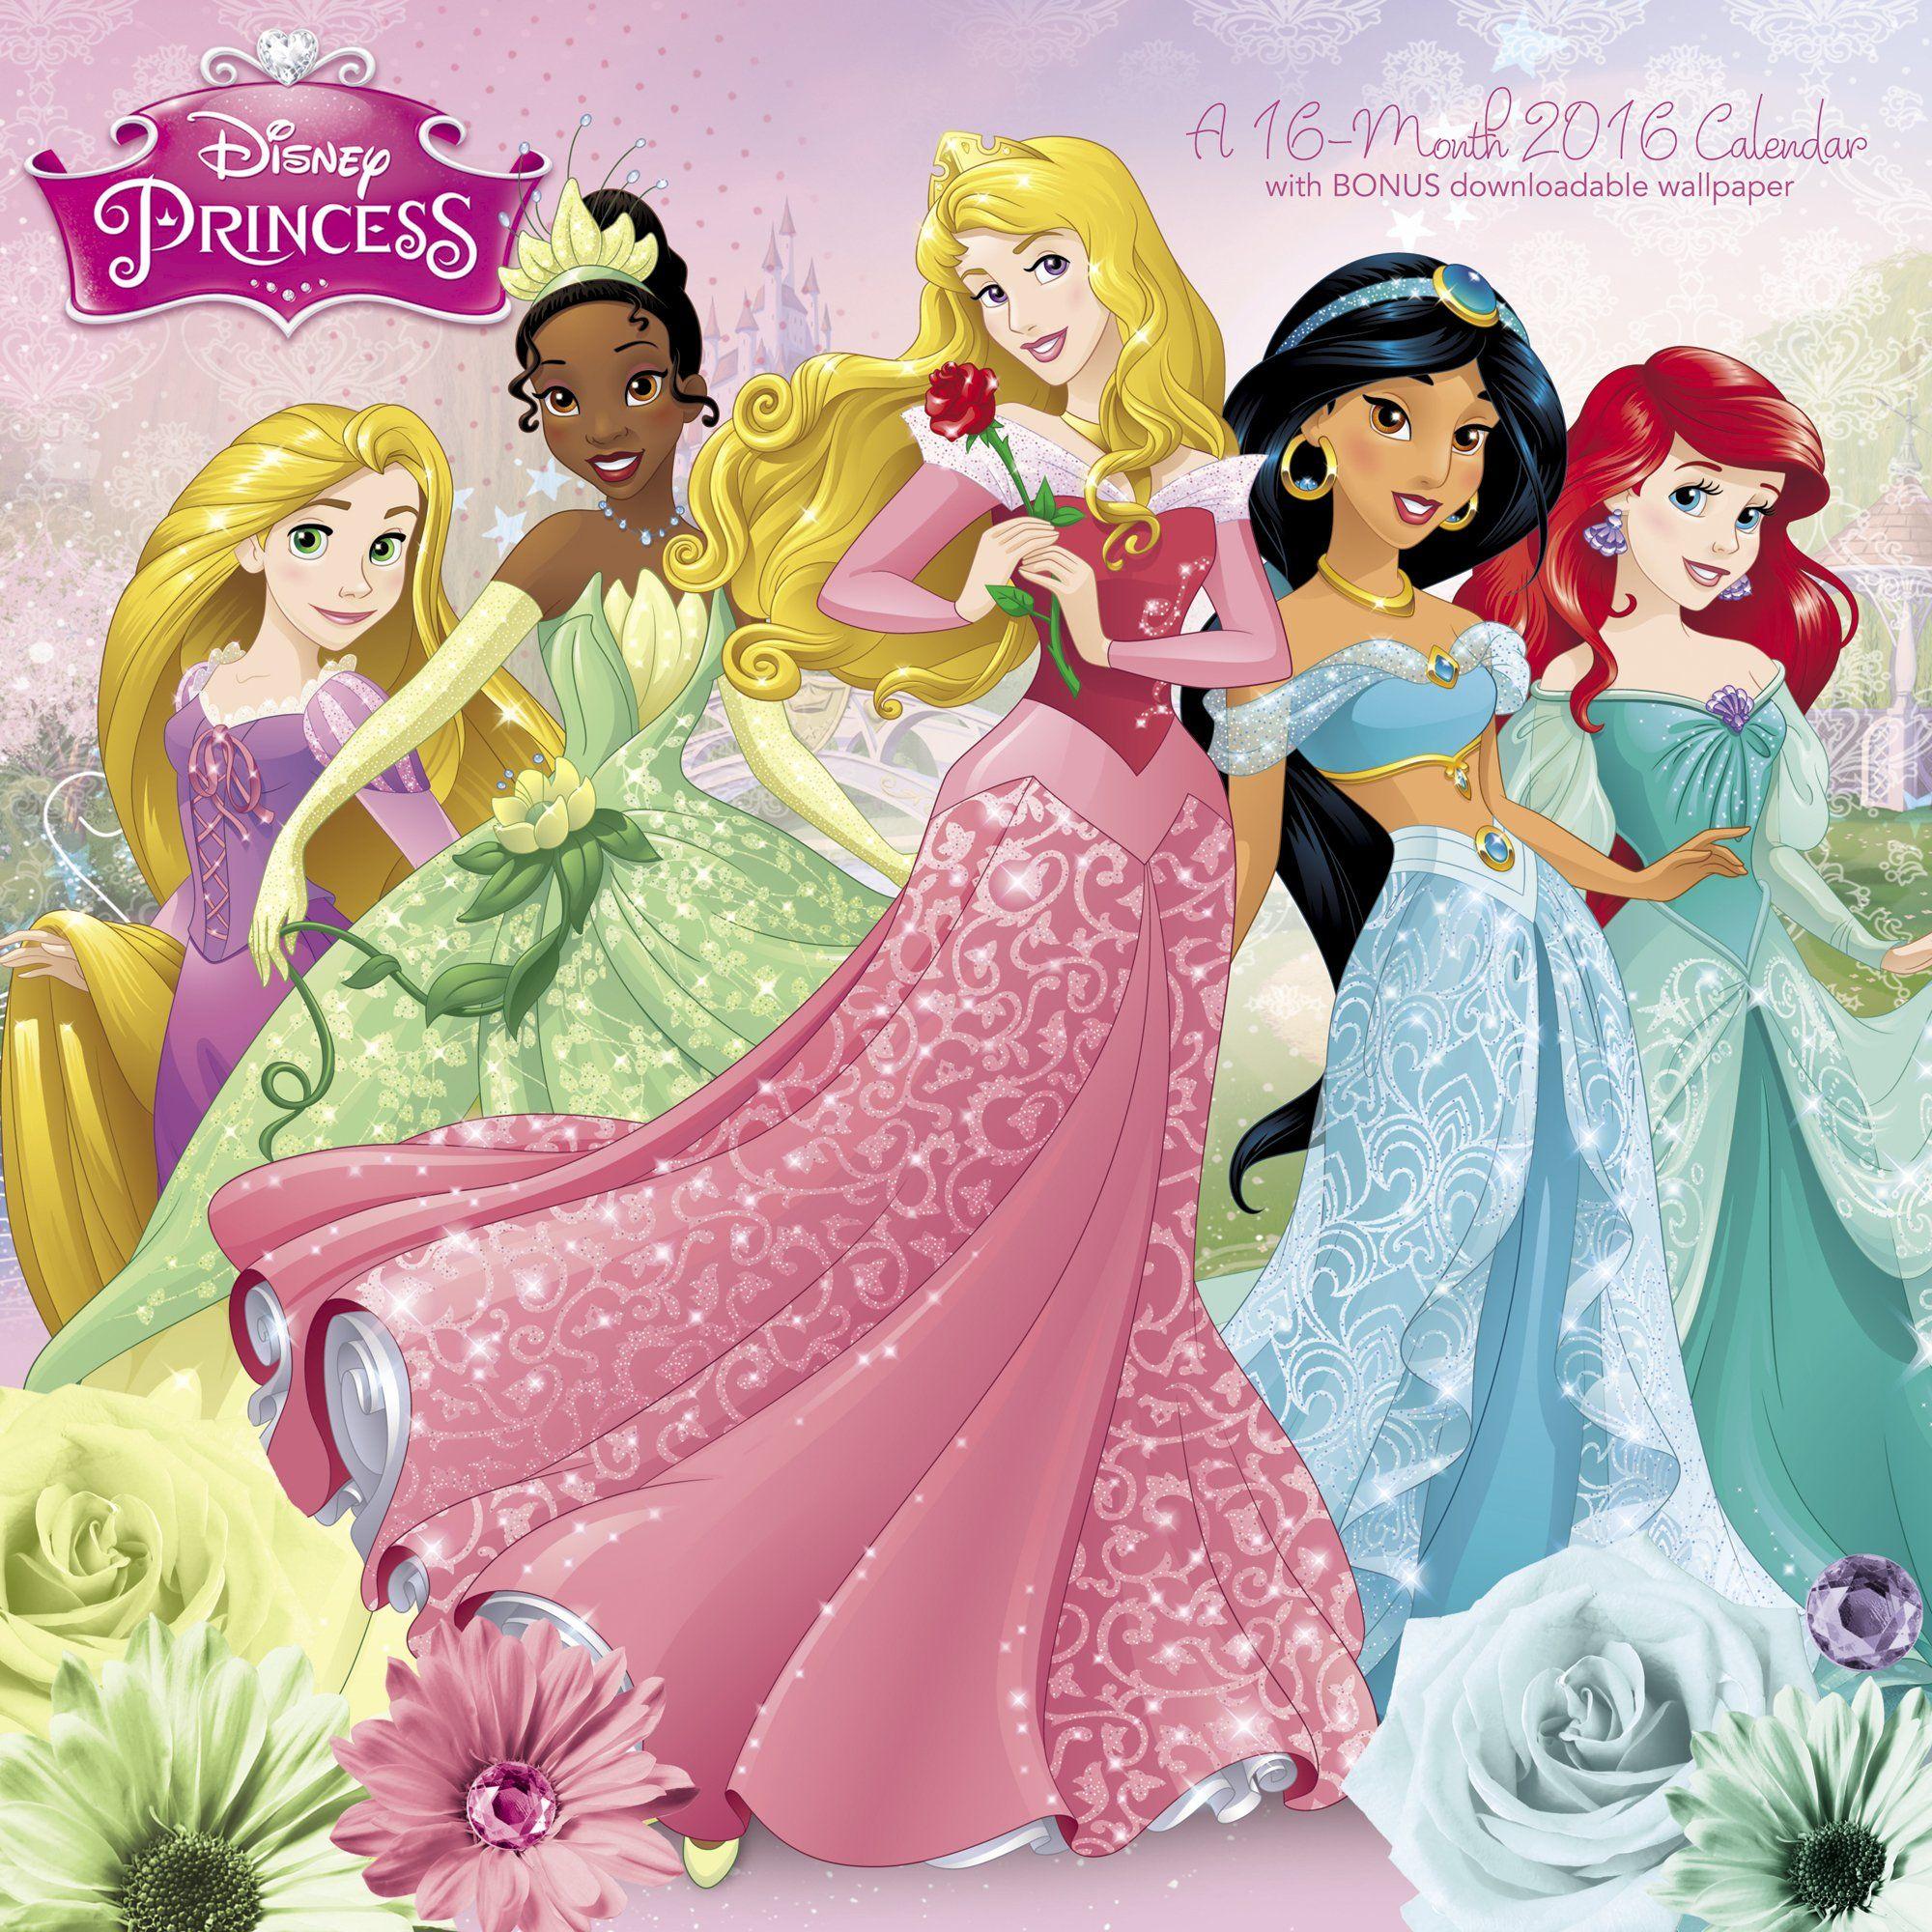 Amazon.in: Buy Disney Princess 2016 Calendar: Includes Downloadable